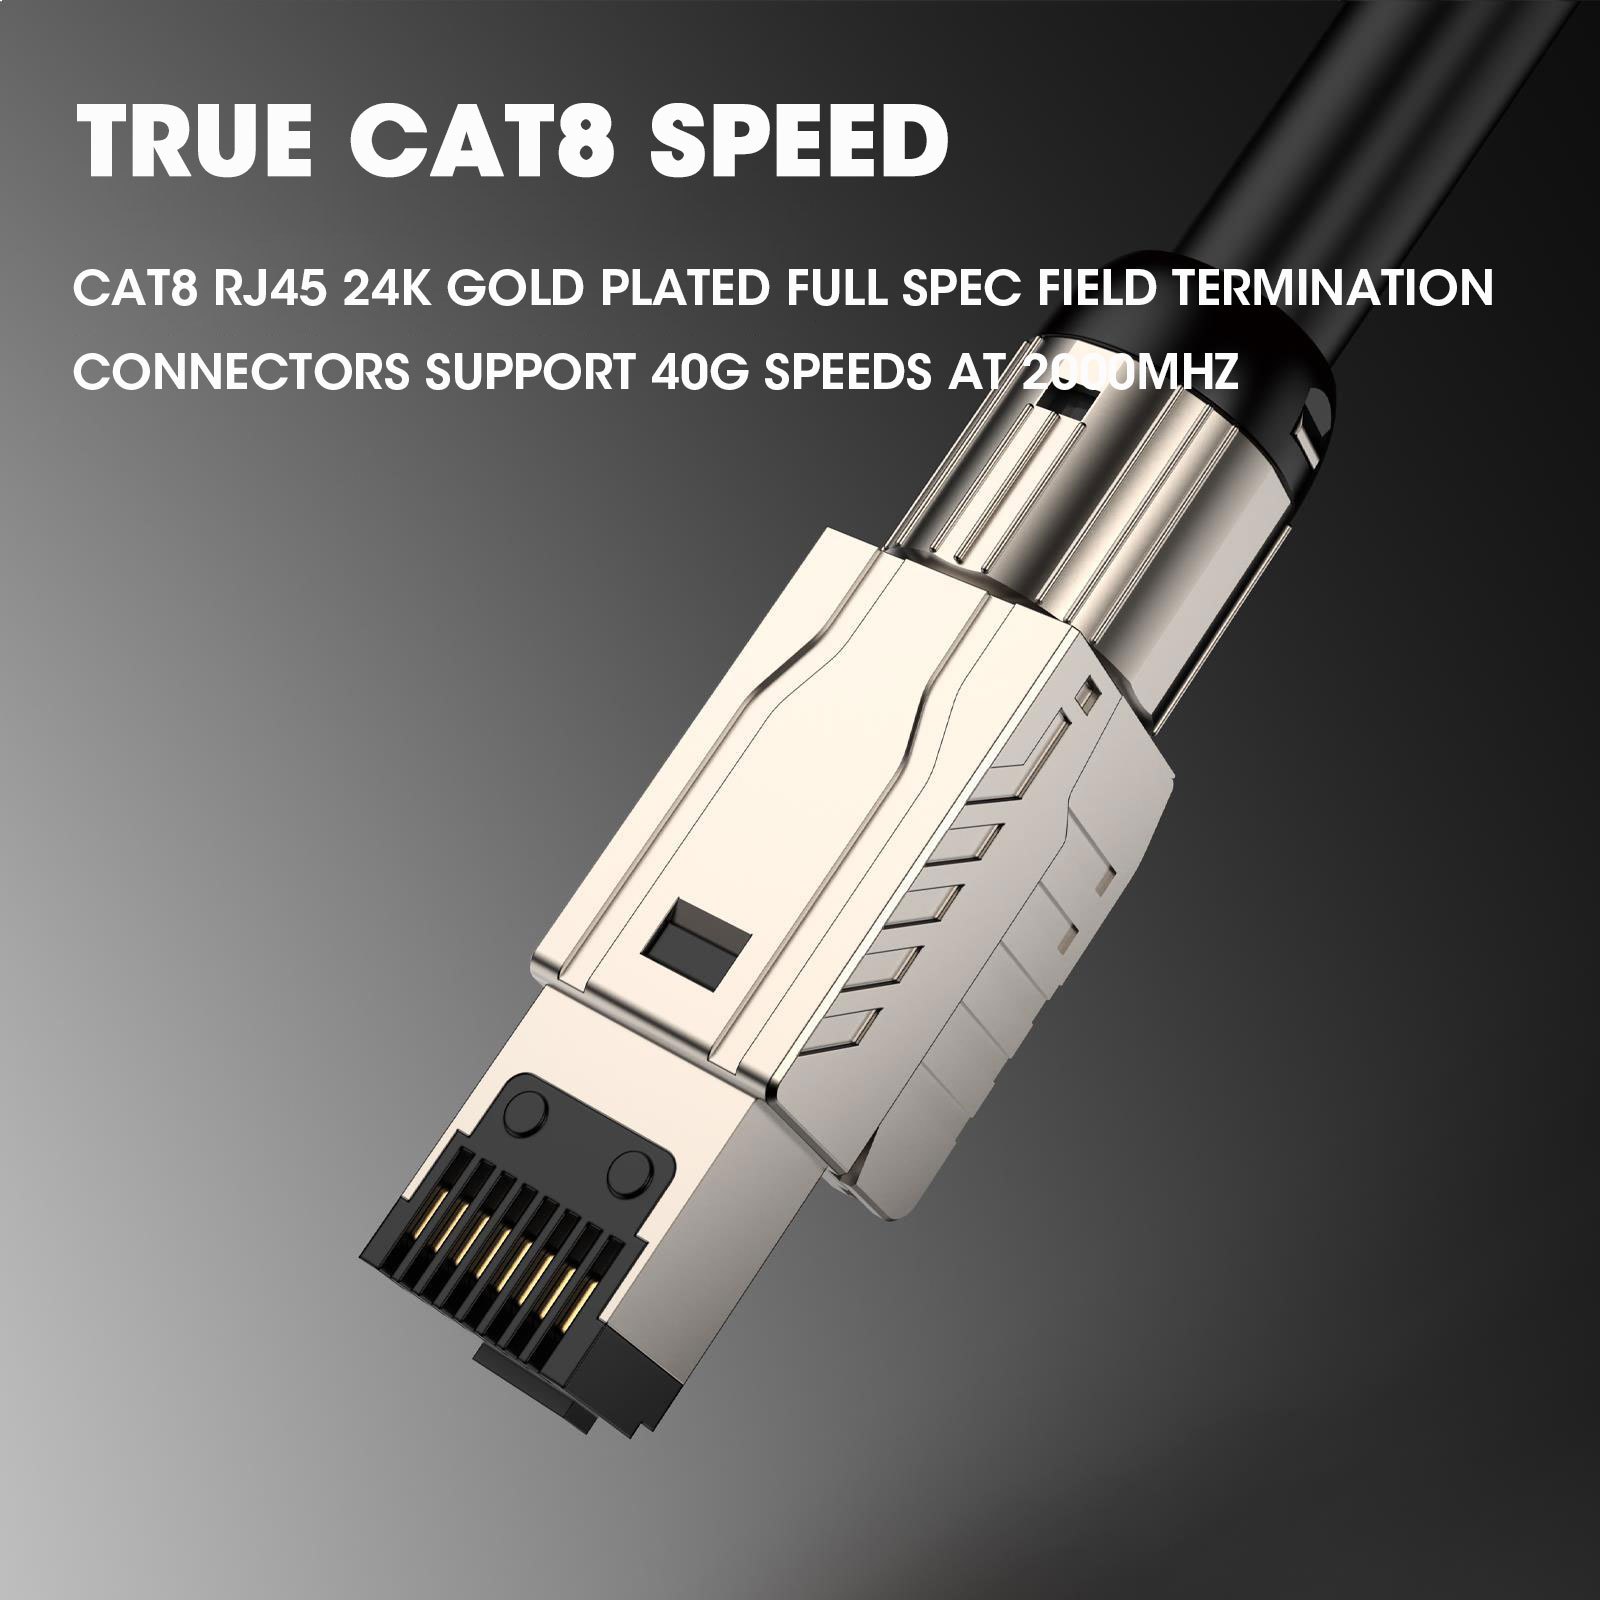 ZoeRax Conectores Rj45 Blindados y Chapados en Oro, Enchufes Modulares para  Cable de Red Cat6A, Cat7 y Cat8, Blindaje FTP/STP, 8P8C 50UM, 1,5mm